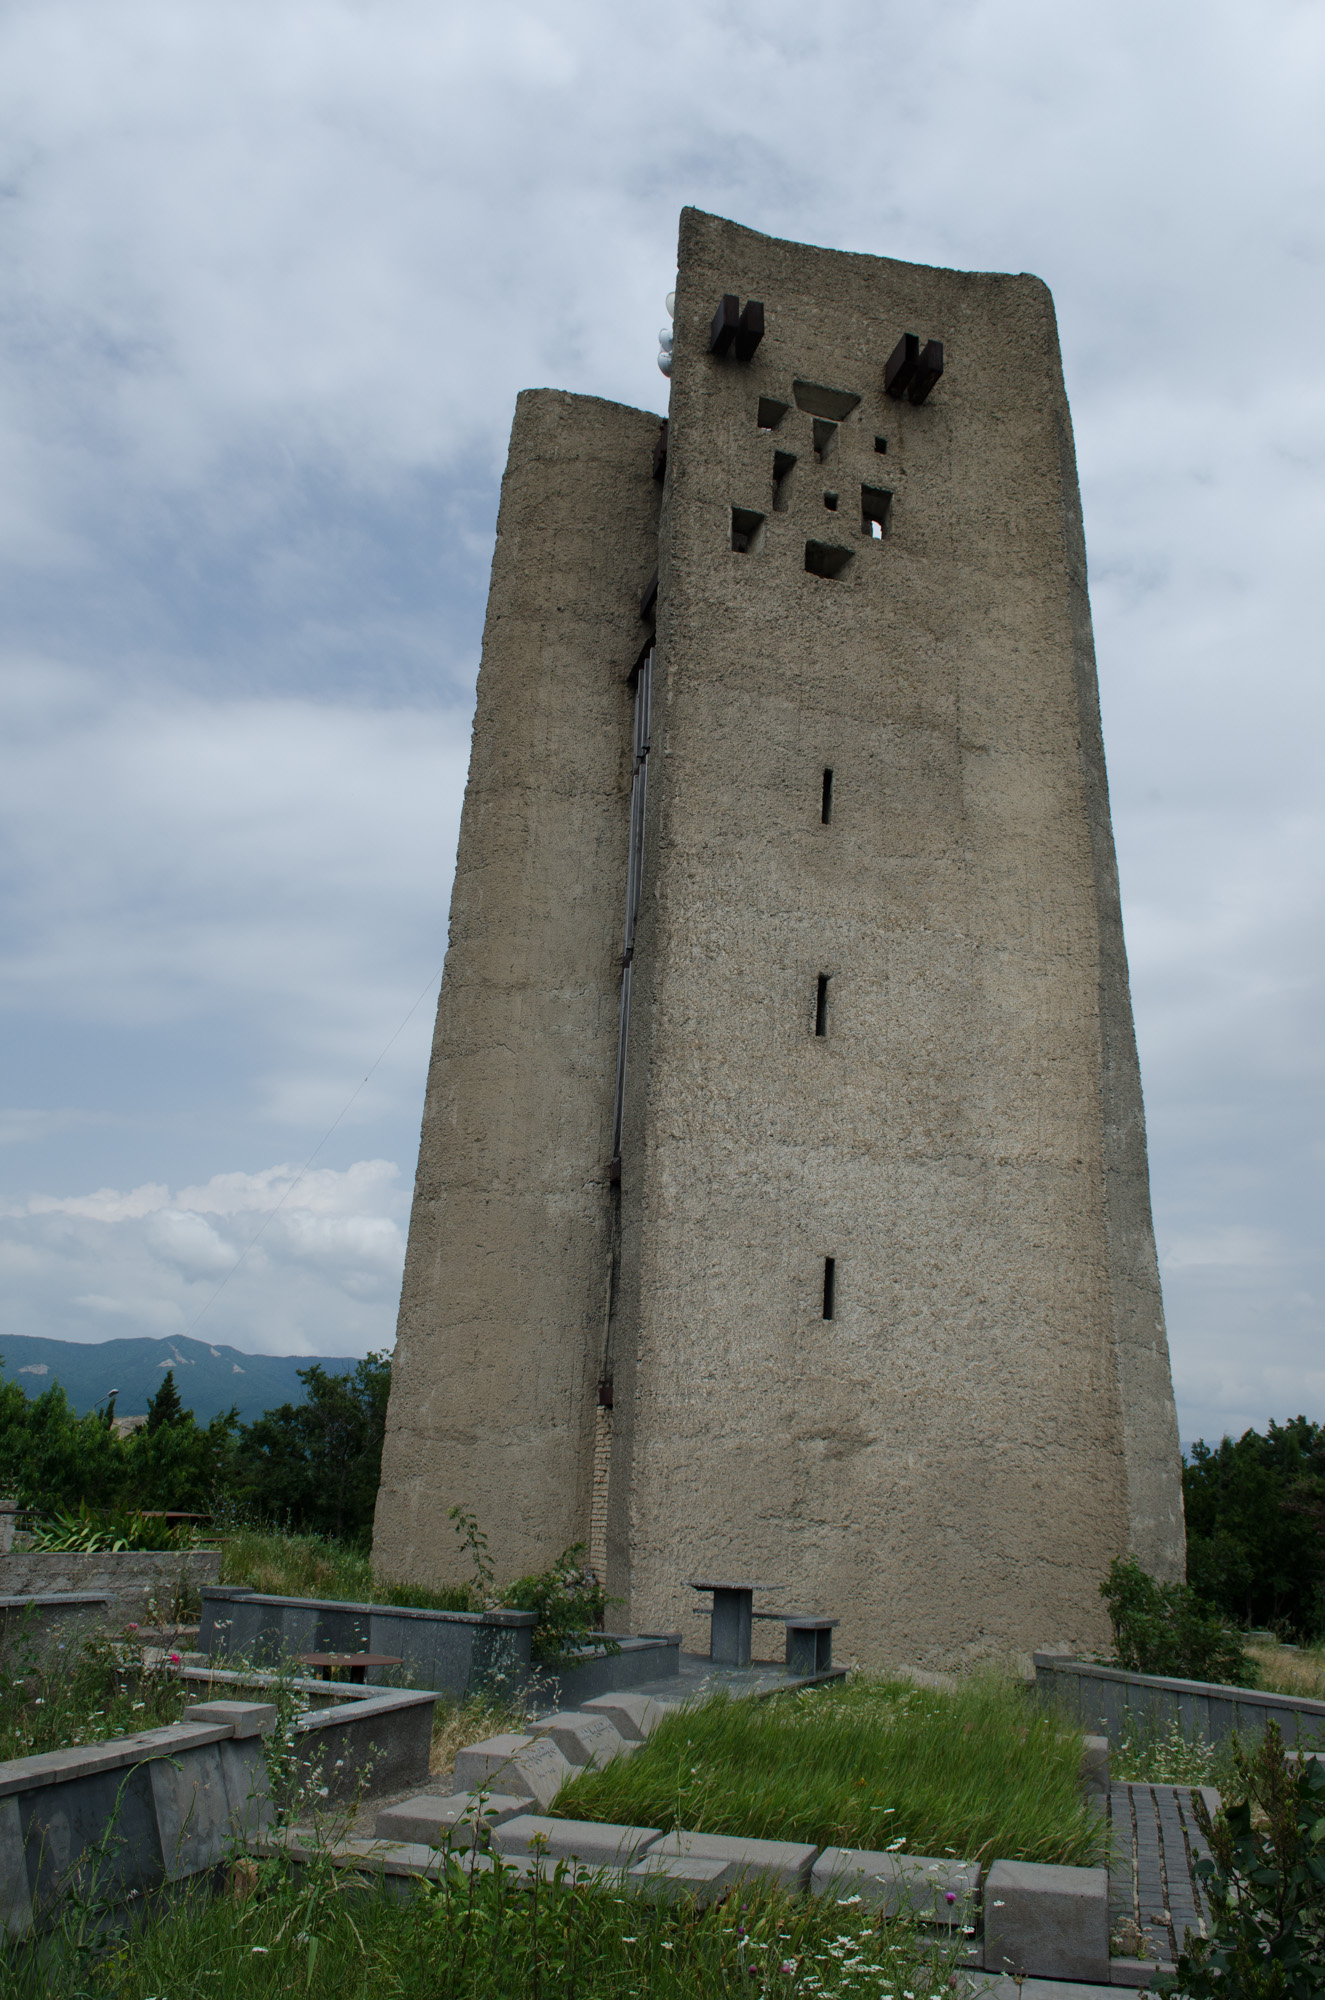 The water tower at Mukhatgverdi has echoes of Erno Goldfinger's Balfron Tower. Image: Vladimer Shioshvili